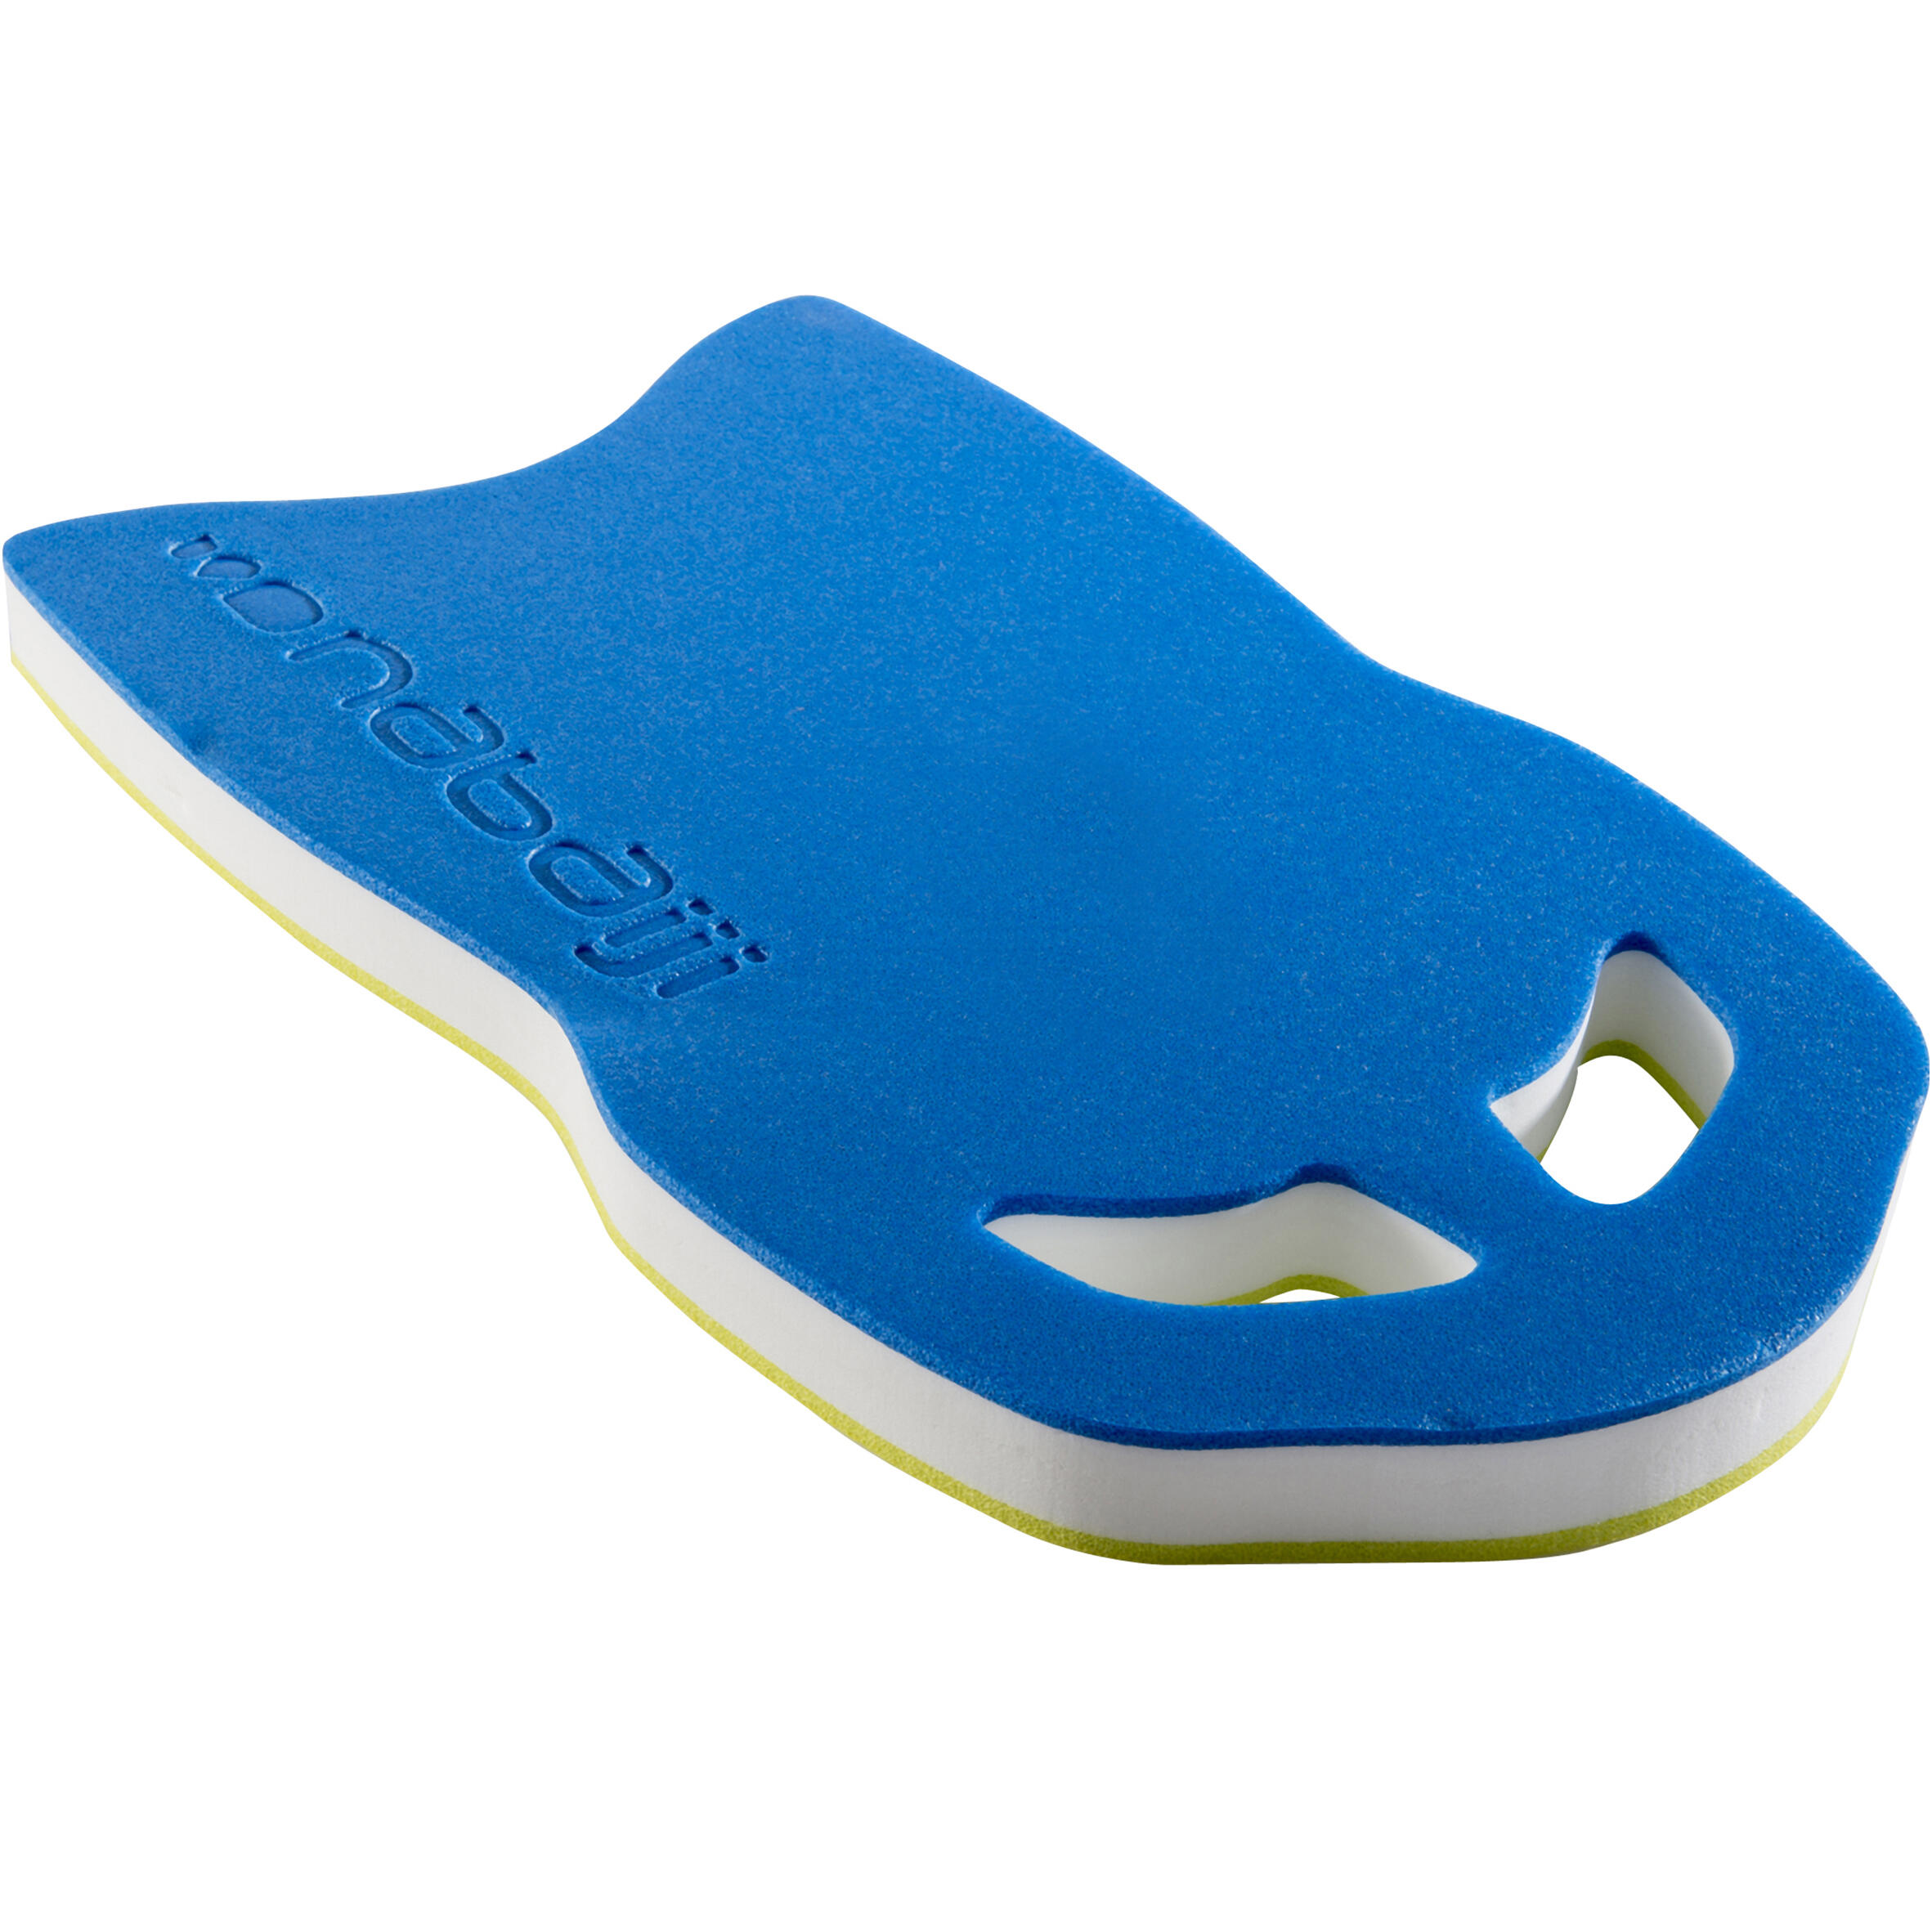 Swimming Kickboard Blue Yellow